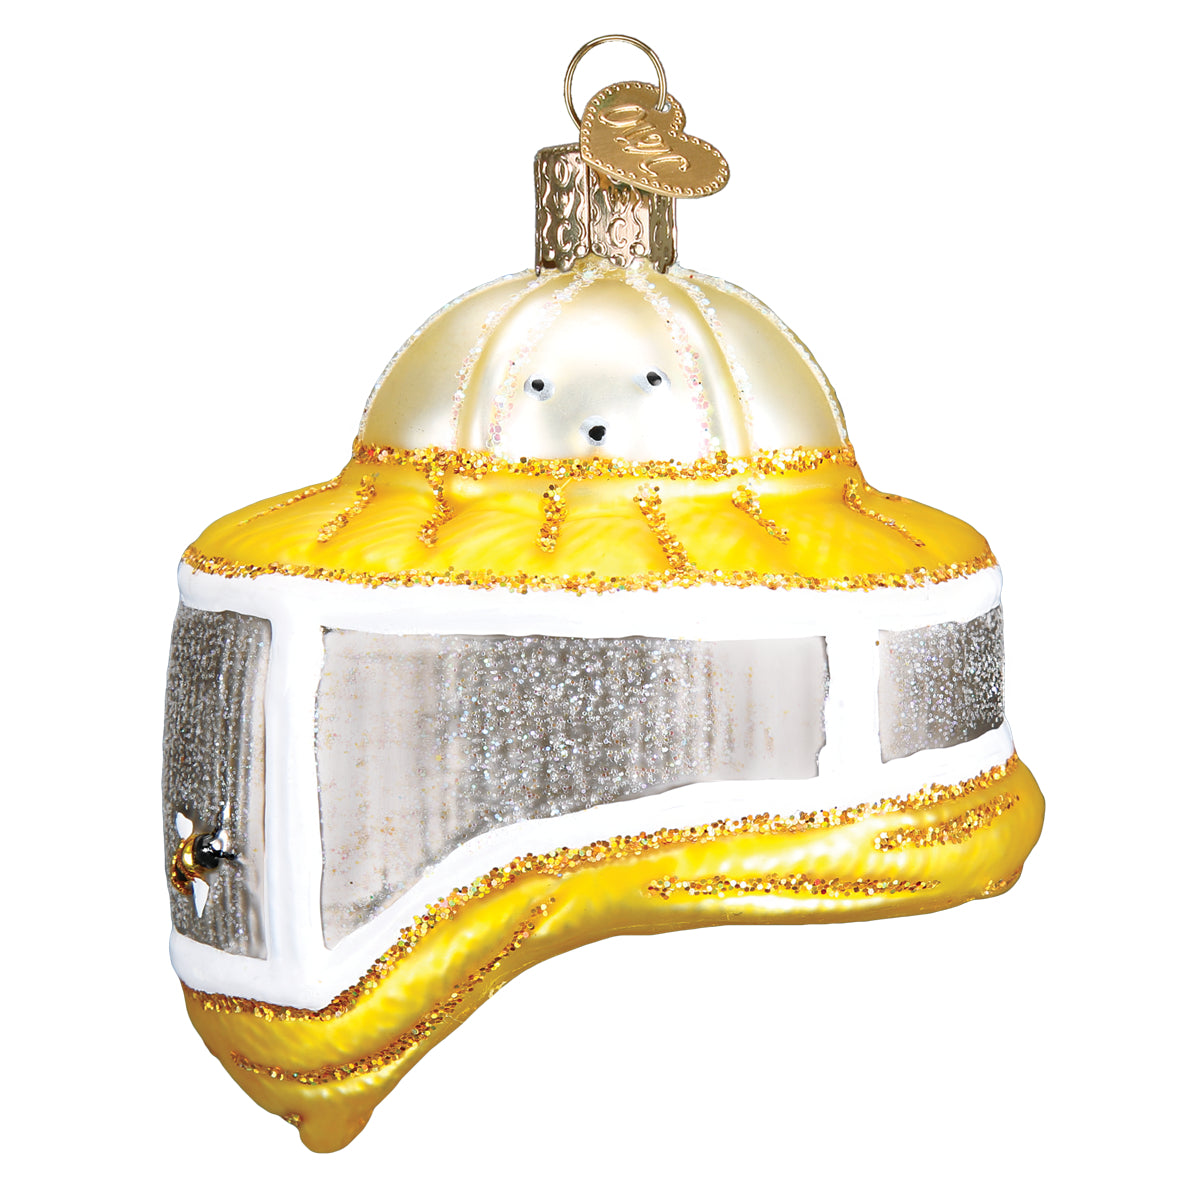 Beekeeper's Hood Ornament